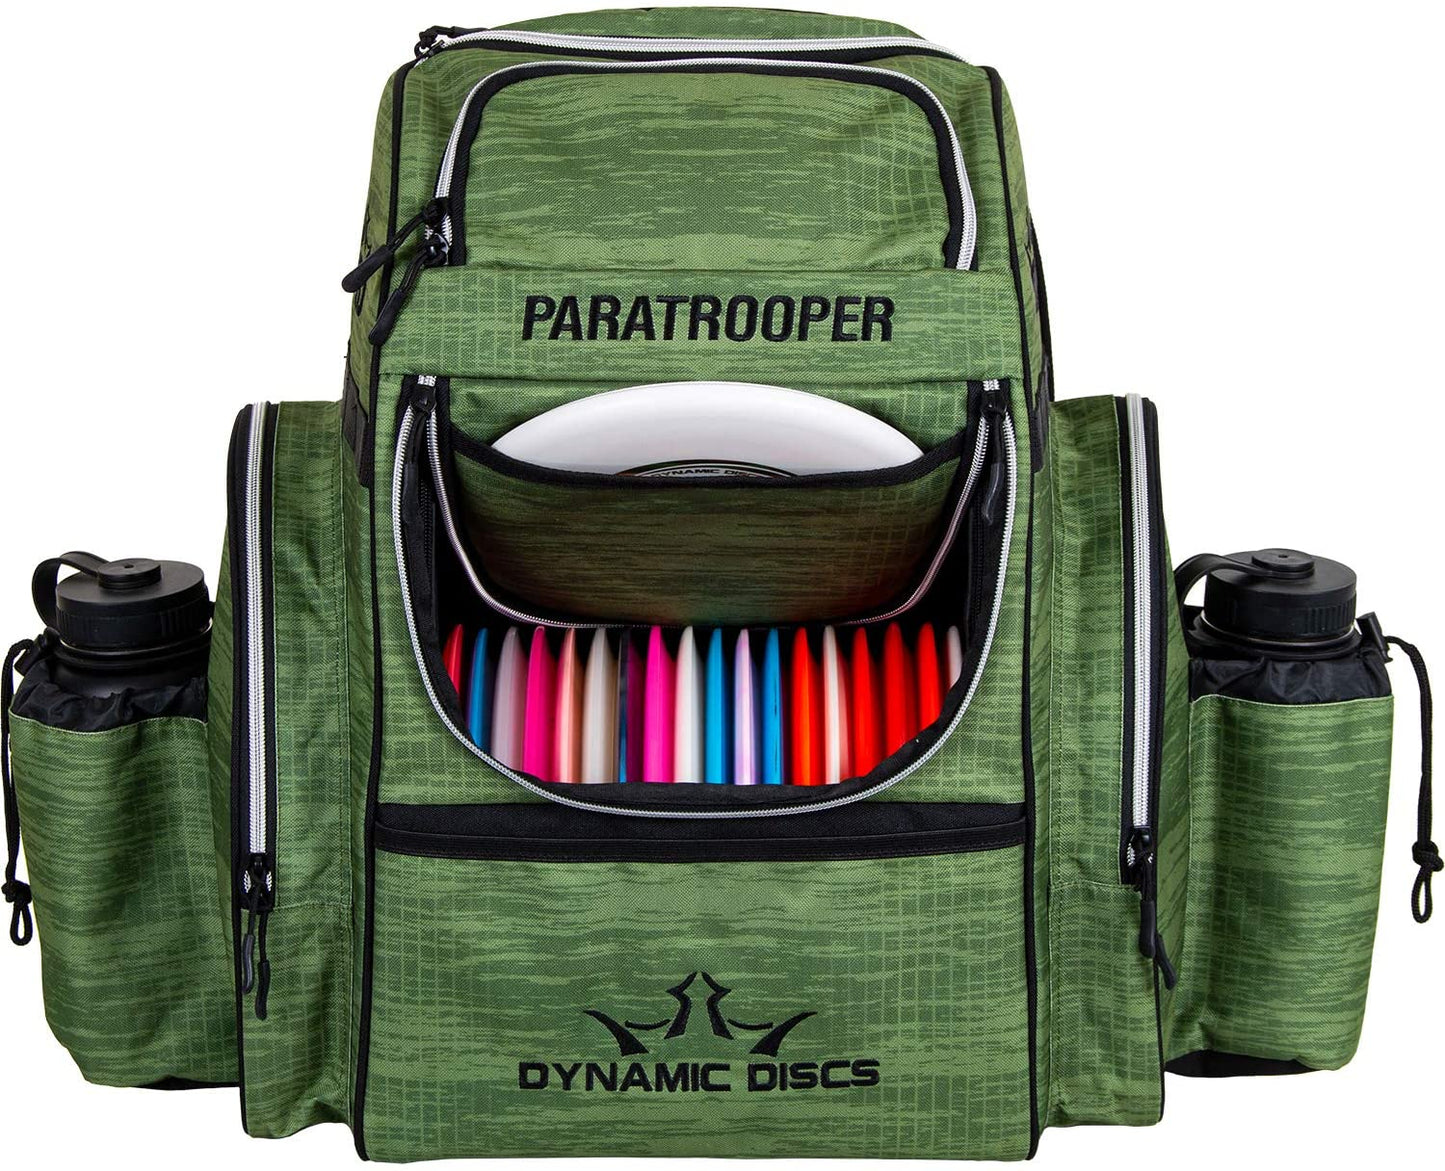 Dynamic Discs Paratrooper Disc Golf Bag - Scratched Camo Green - Dynamic Discs